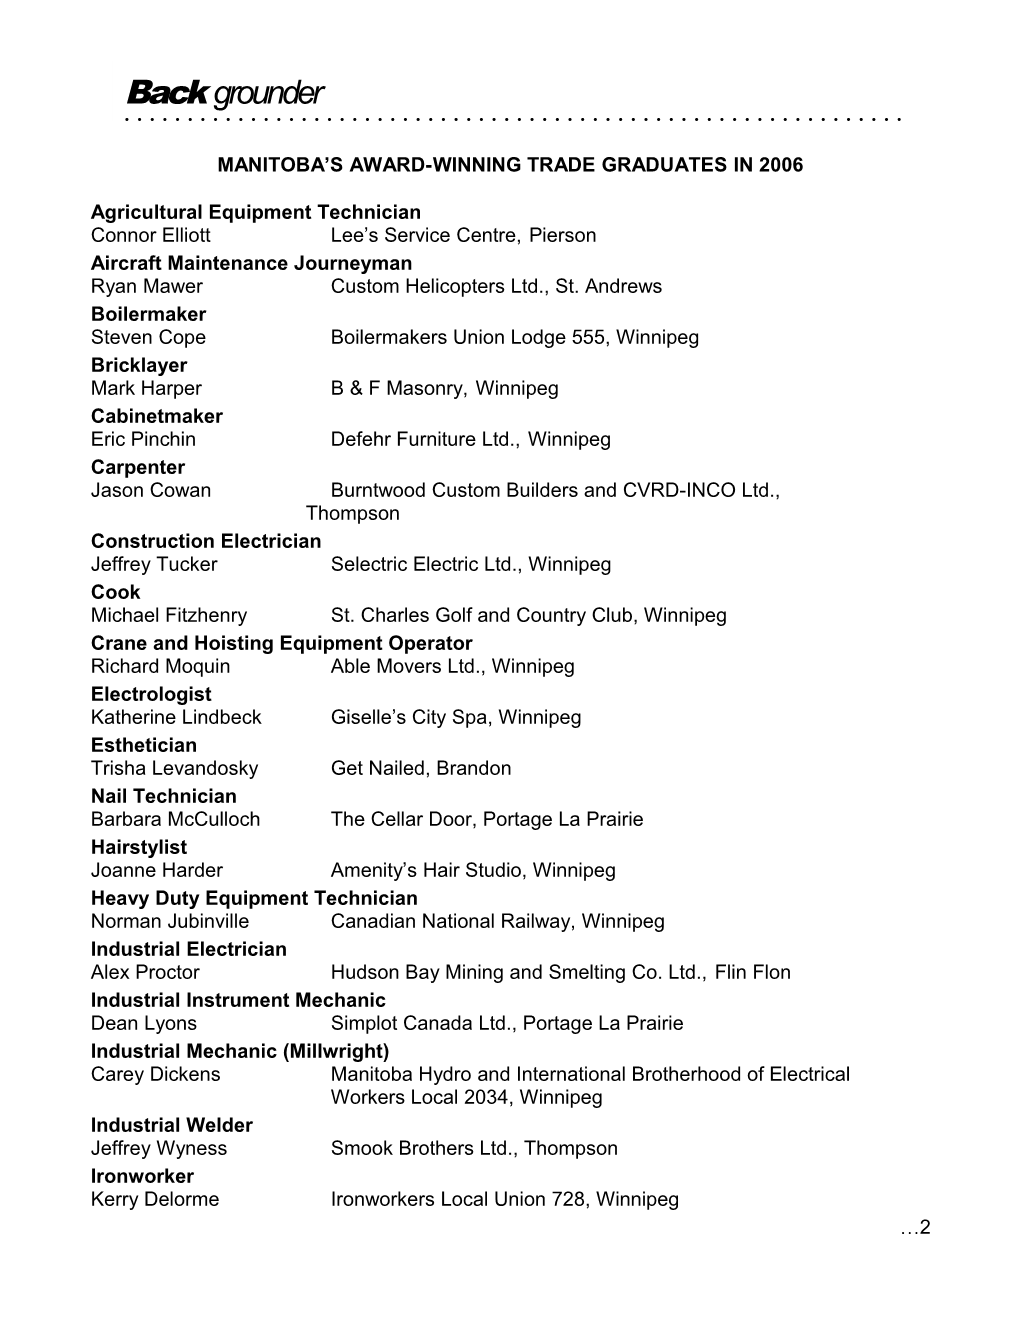 Manitoba S Award-Winning Trade Graduates in 2006